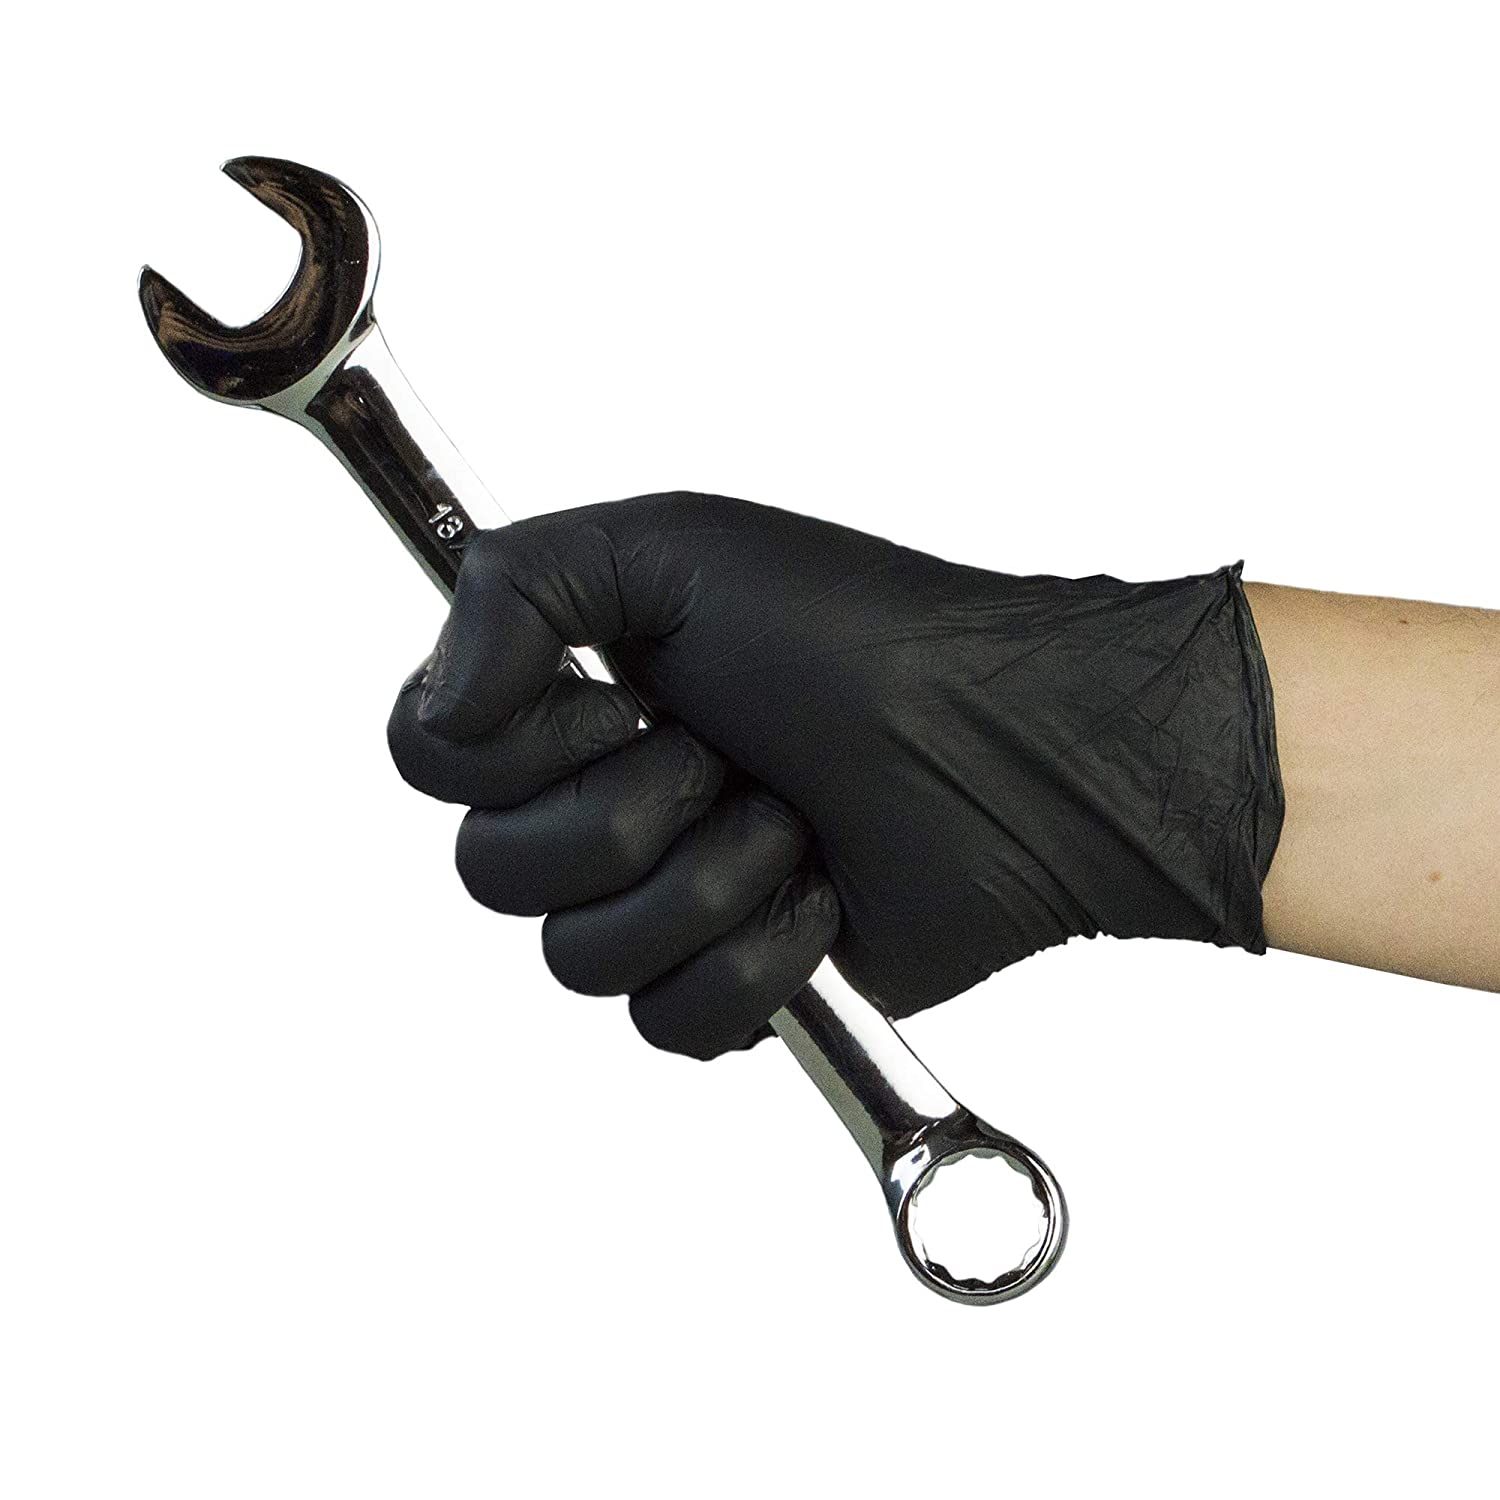 GlovePlus Nitrile Latex-Free Industrial Gloves, Small, Black, 100/Box